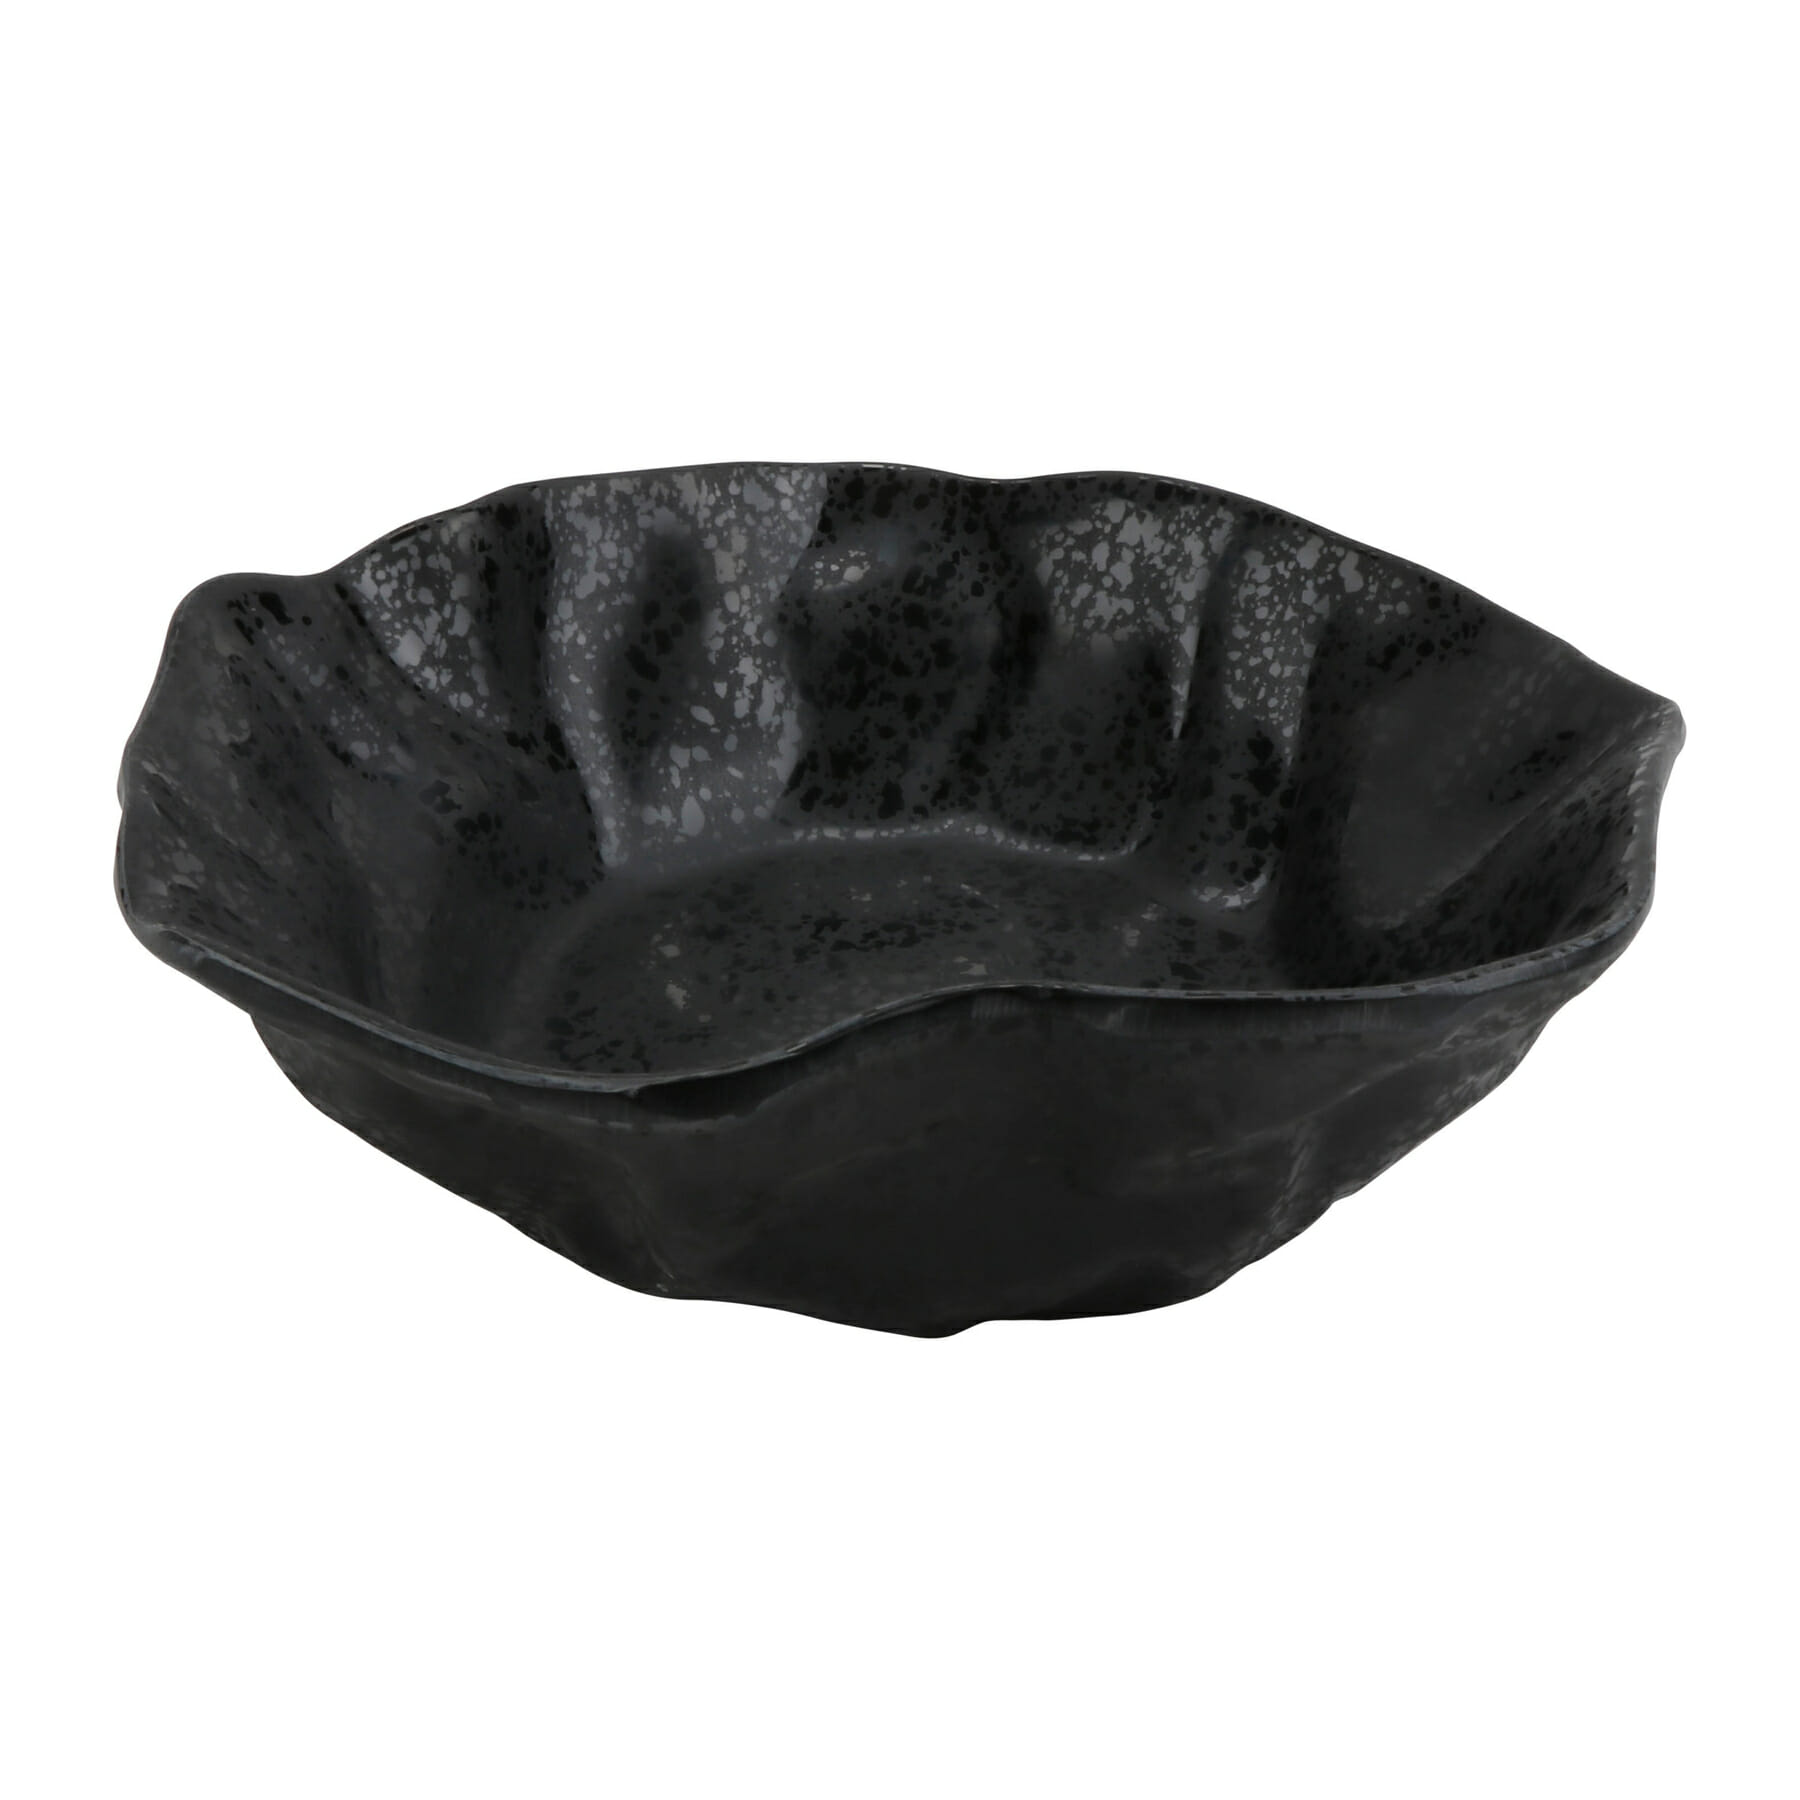 RNX204 - 23.67 oz rainex showered black medium melamine bowl, 7.5L x 7.5W  x 1.5H, GET, cheforward - G.E.T